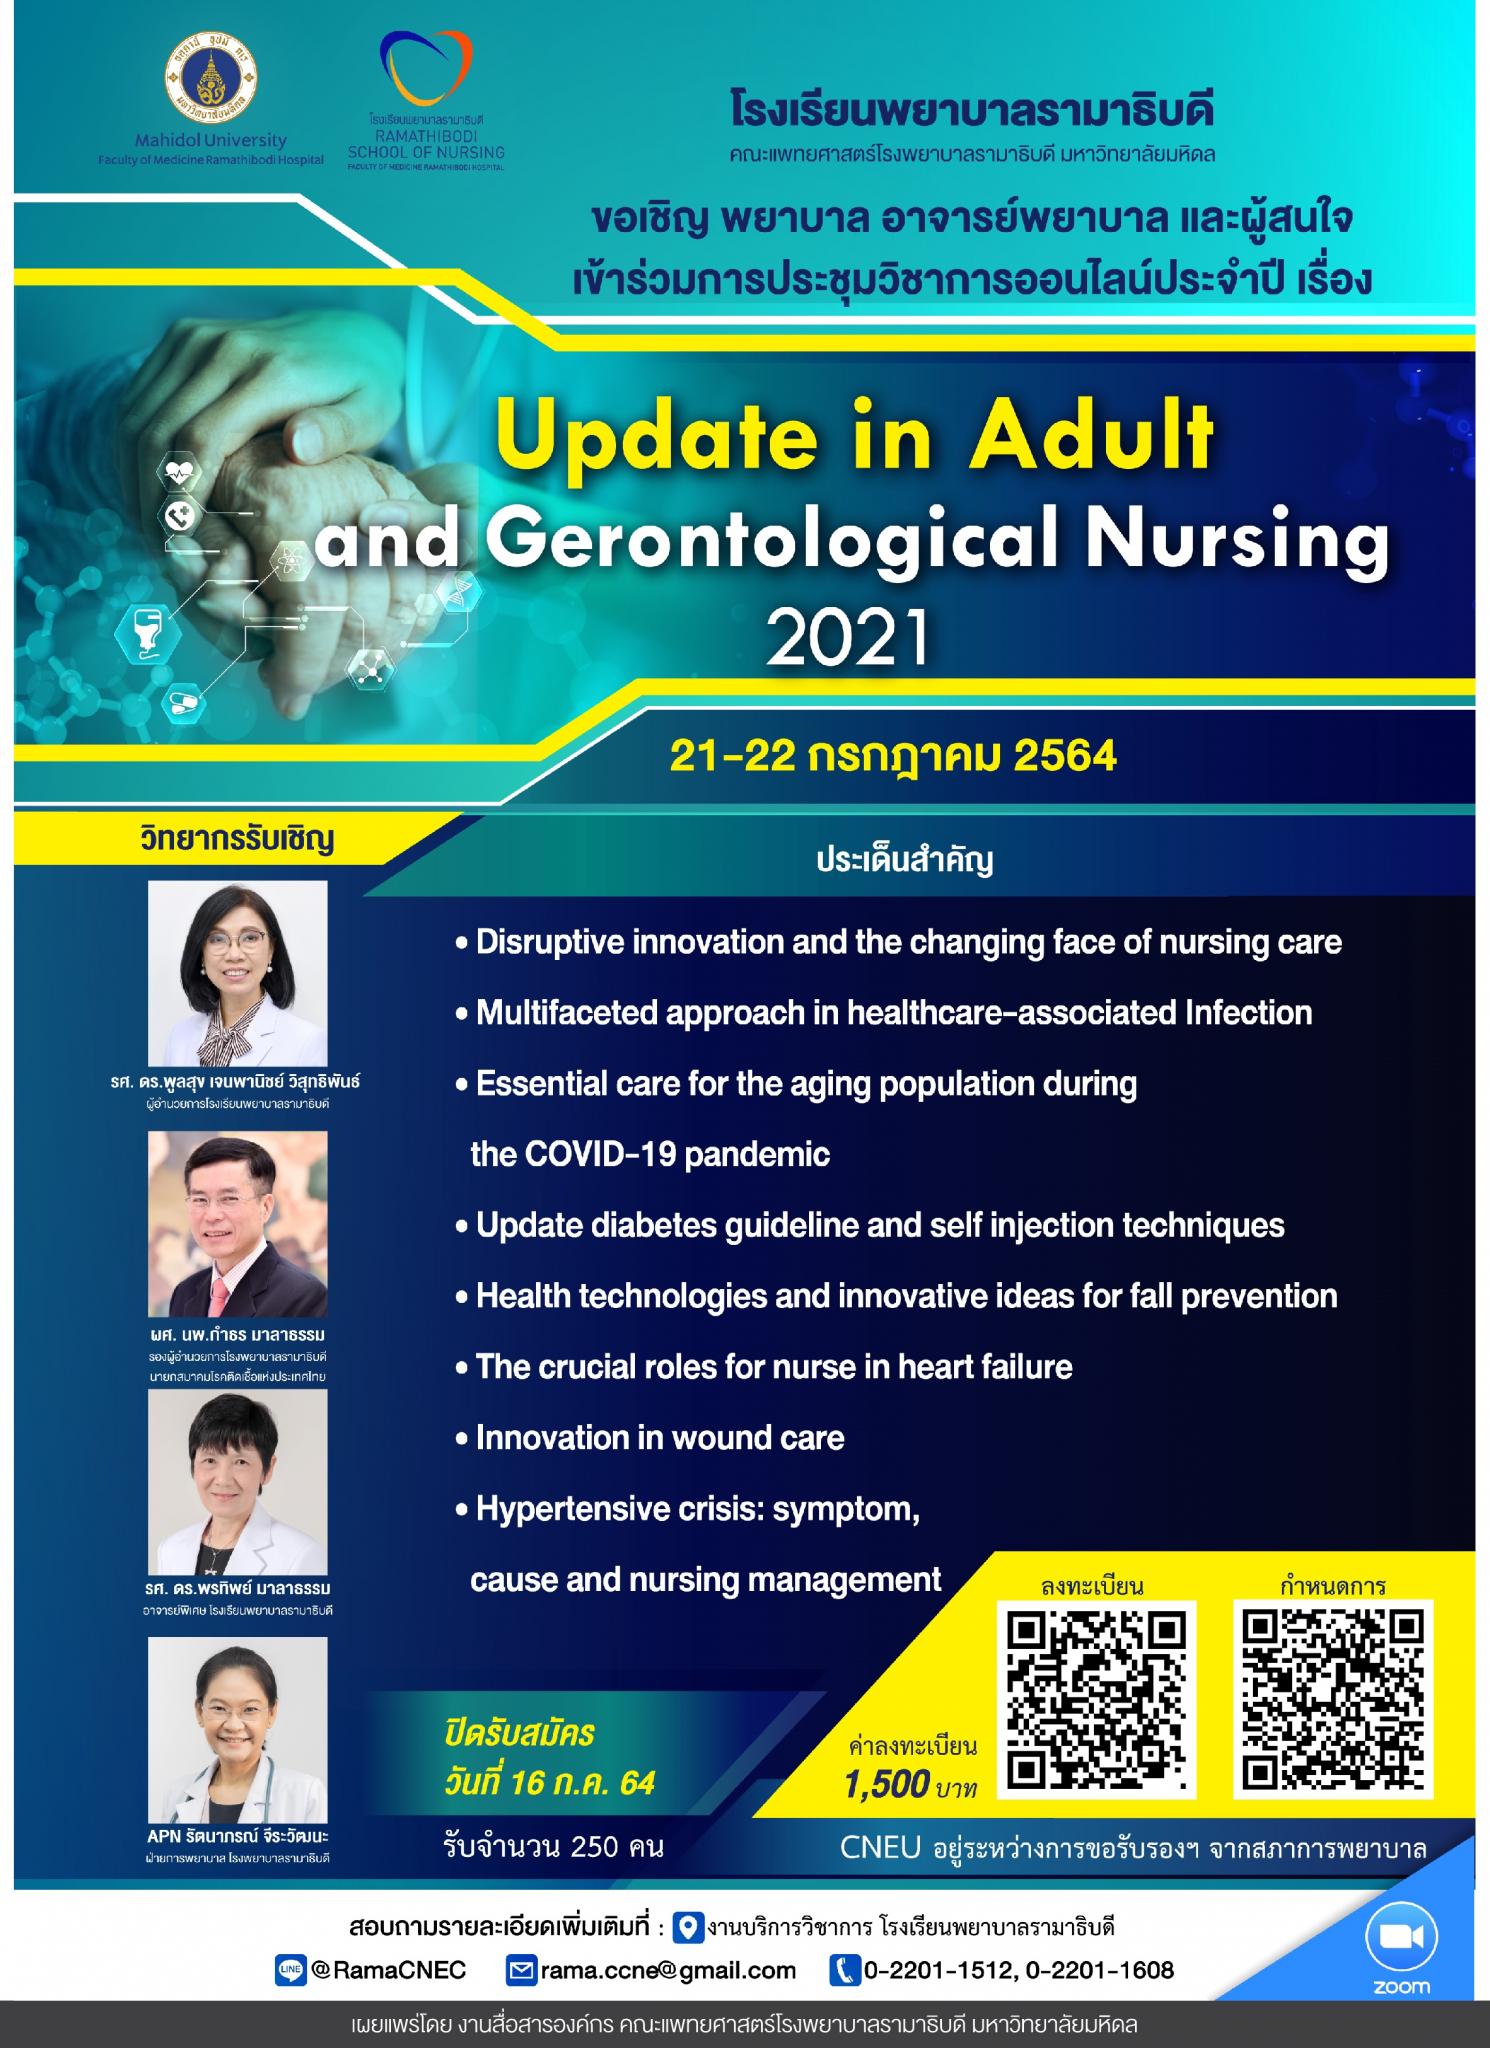 Update in Adult and Gerontological Nursing 2021